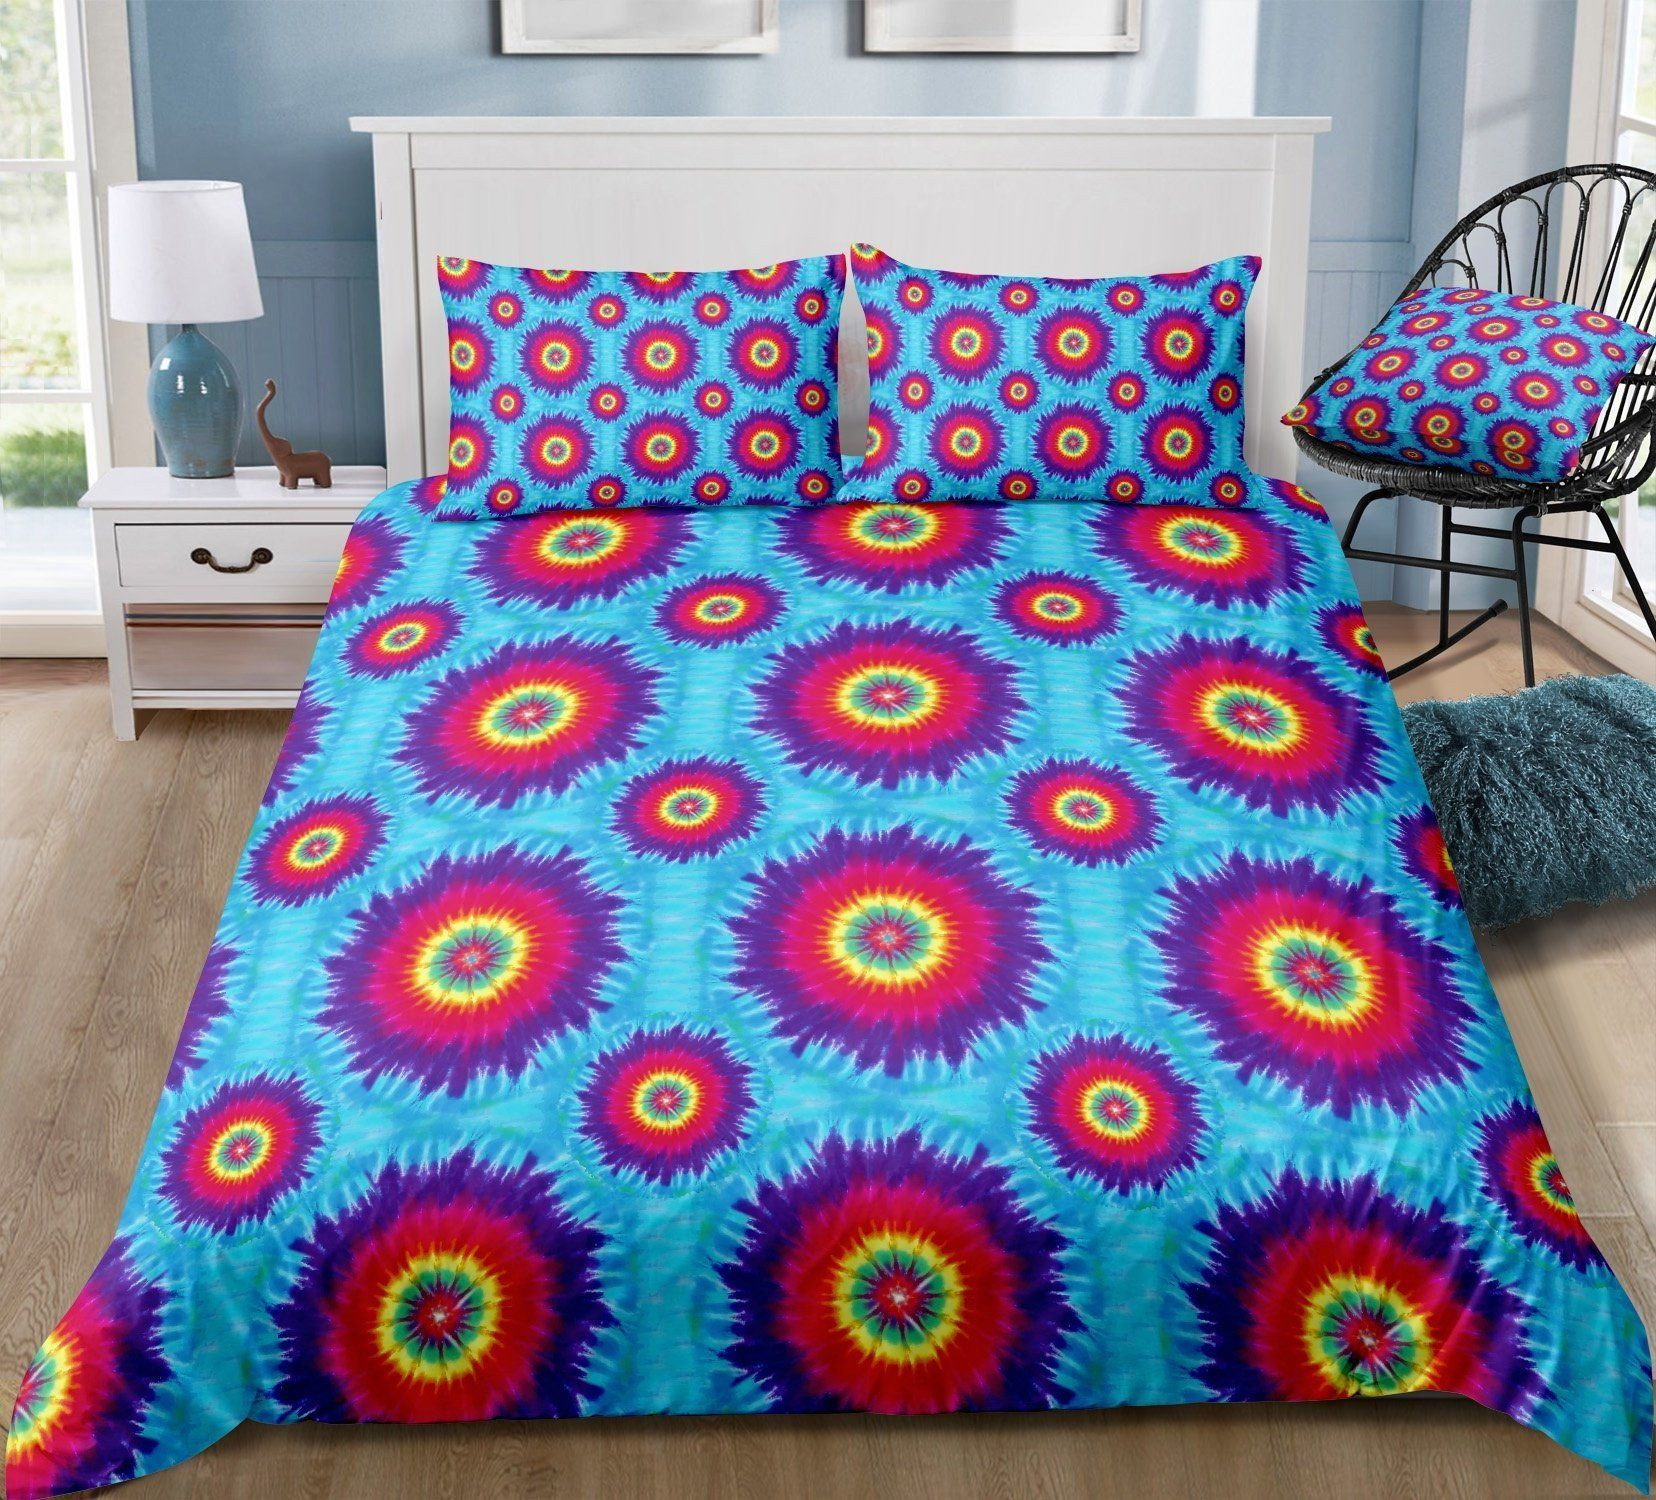 vibrant batik bed sheets duvet cover bedding set ideal presents for birthdays christmas and thanksgiving zhirj